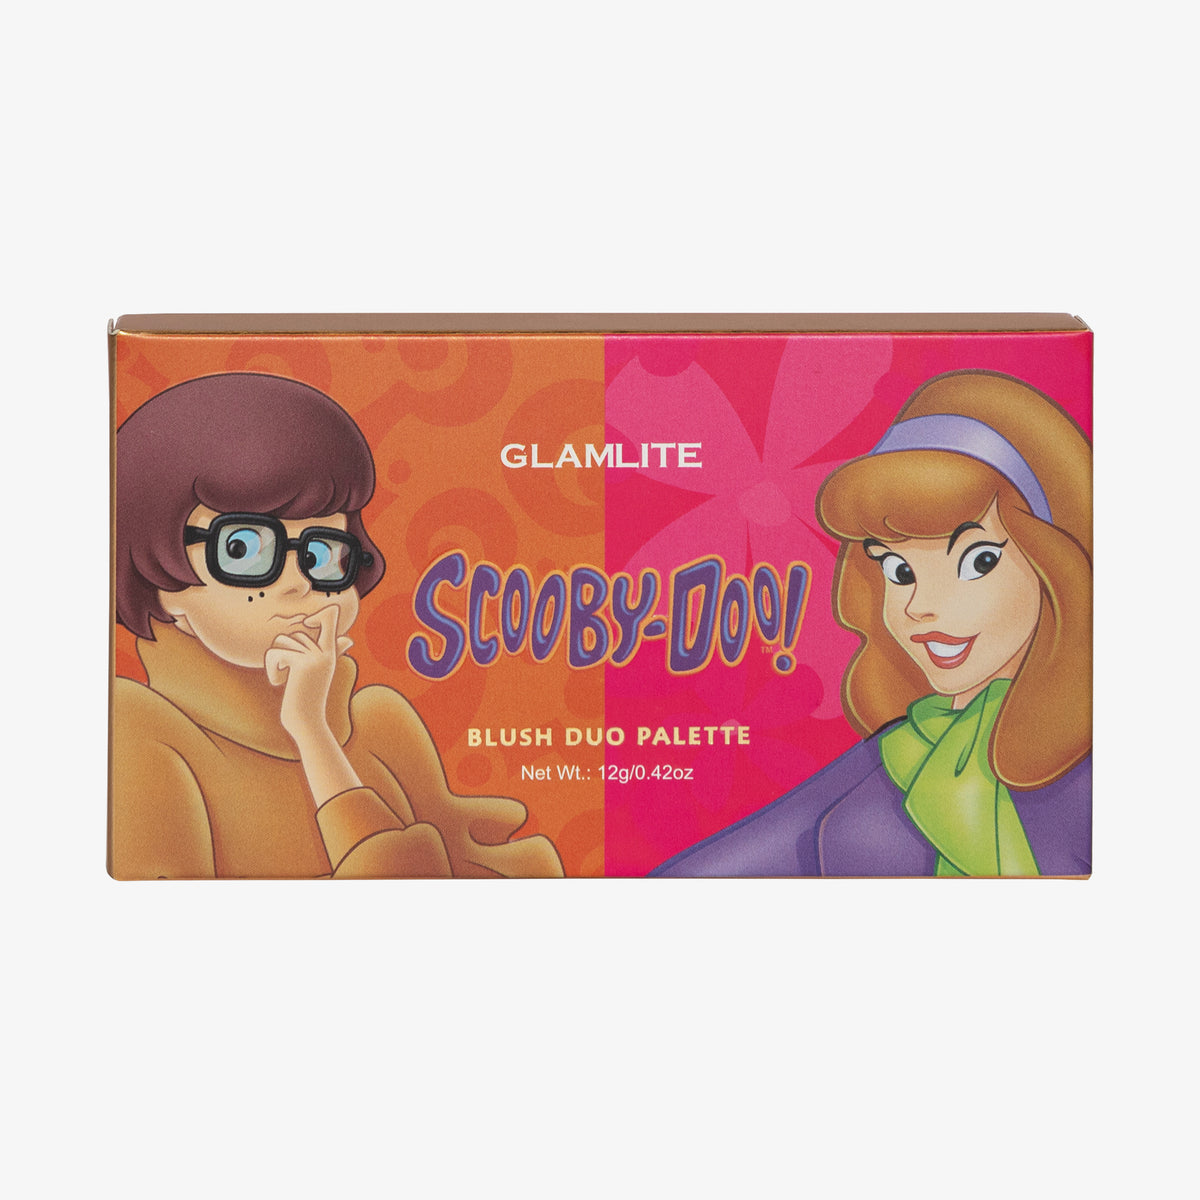 Glamlite Cosmetics |  Scooby-Doo™ x Glamlite Blush Duo Palette